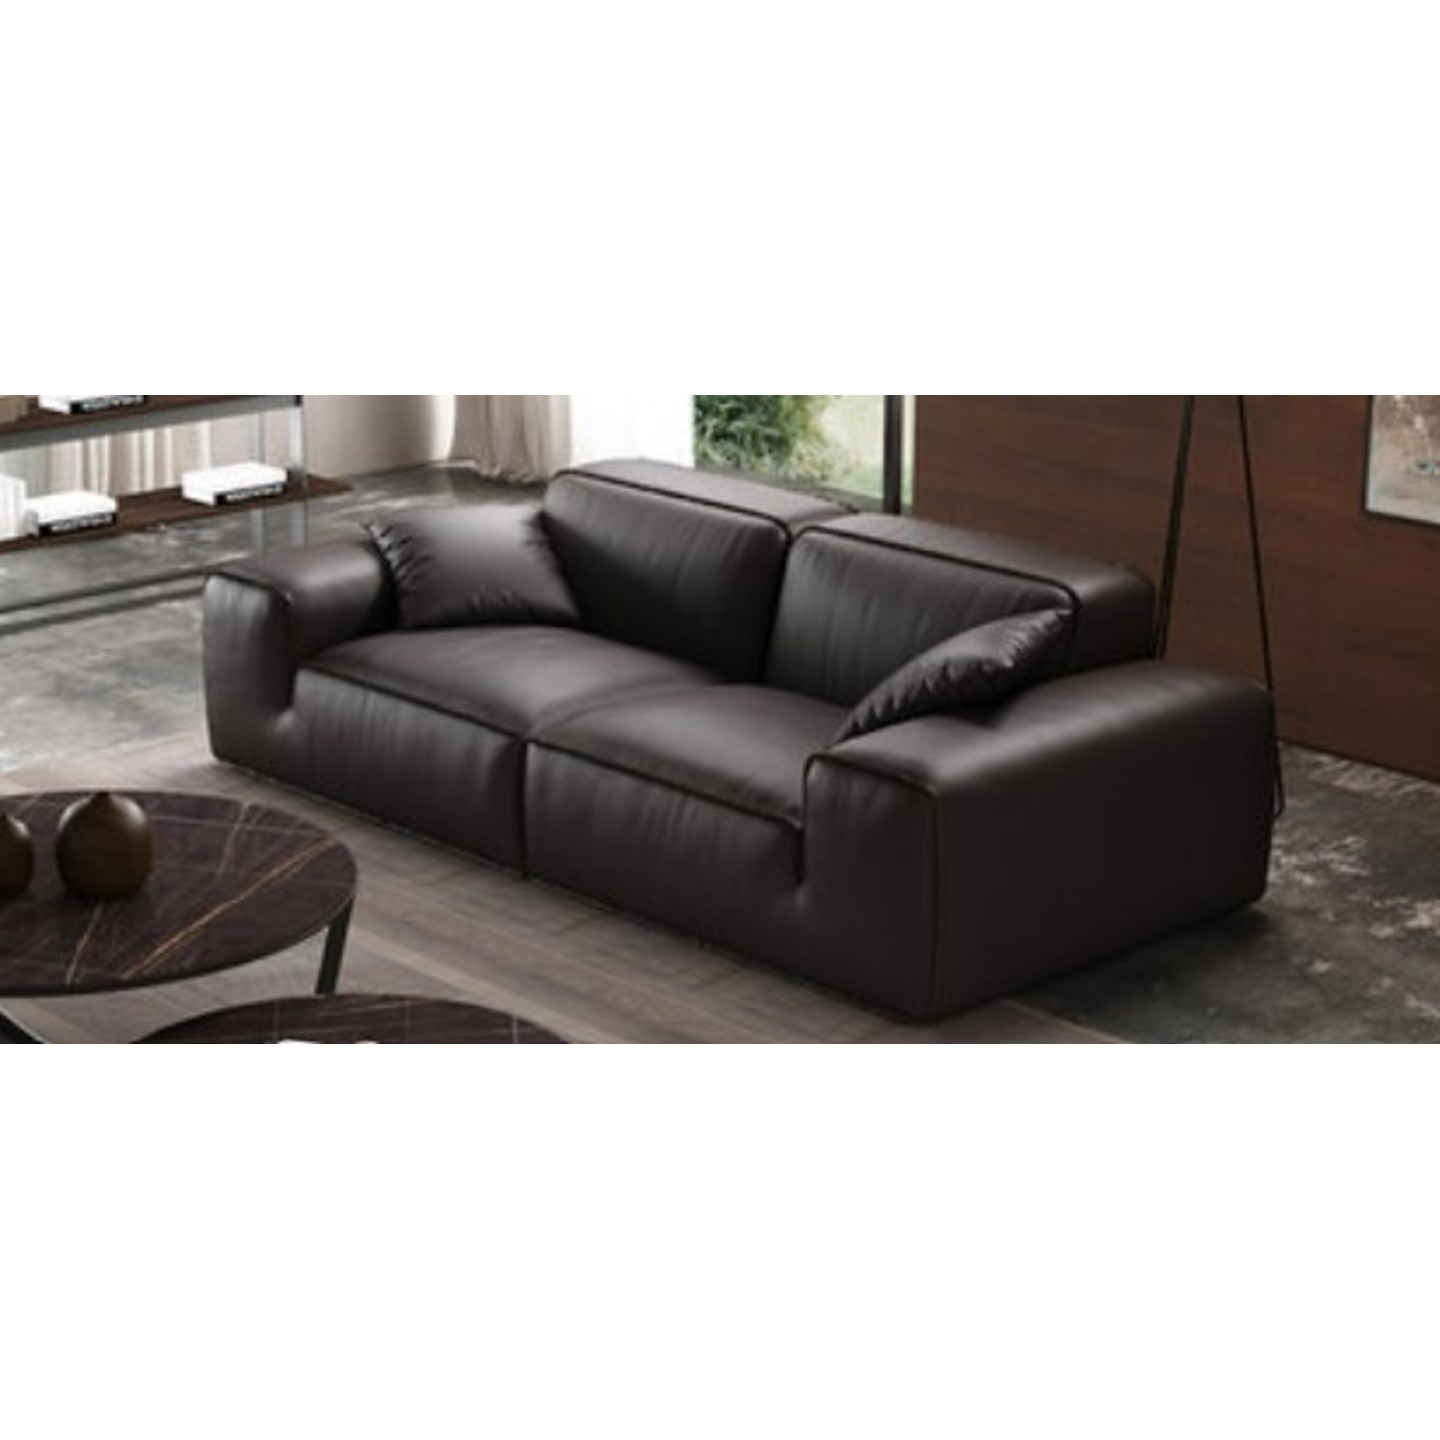 Merino Nordic Style Luxury Sofa Full Leather - Straight Four Seater 222cm